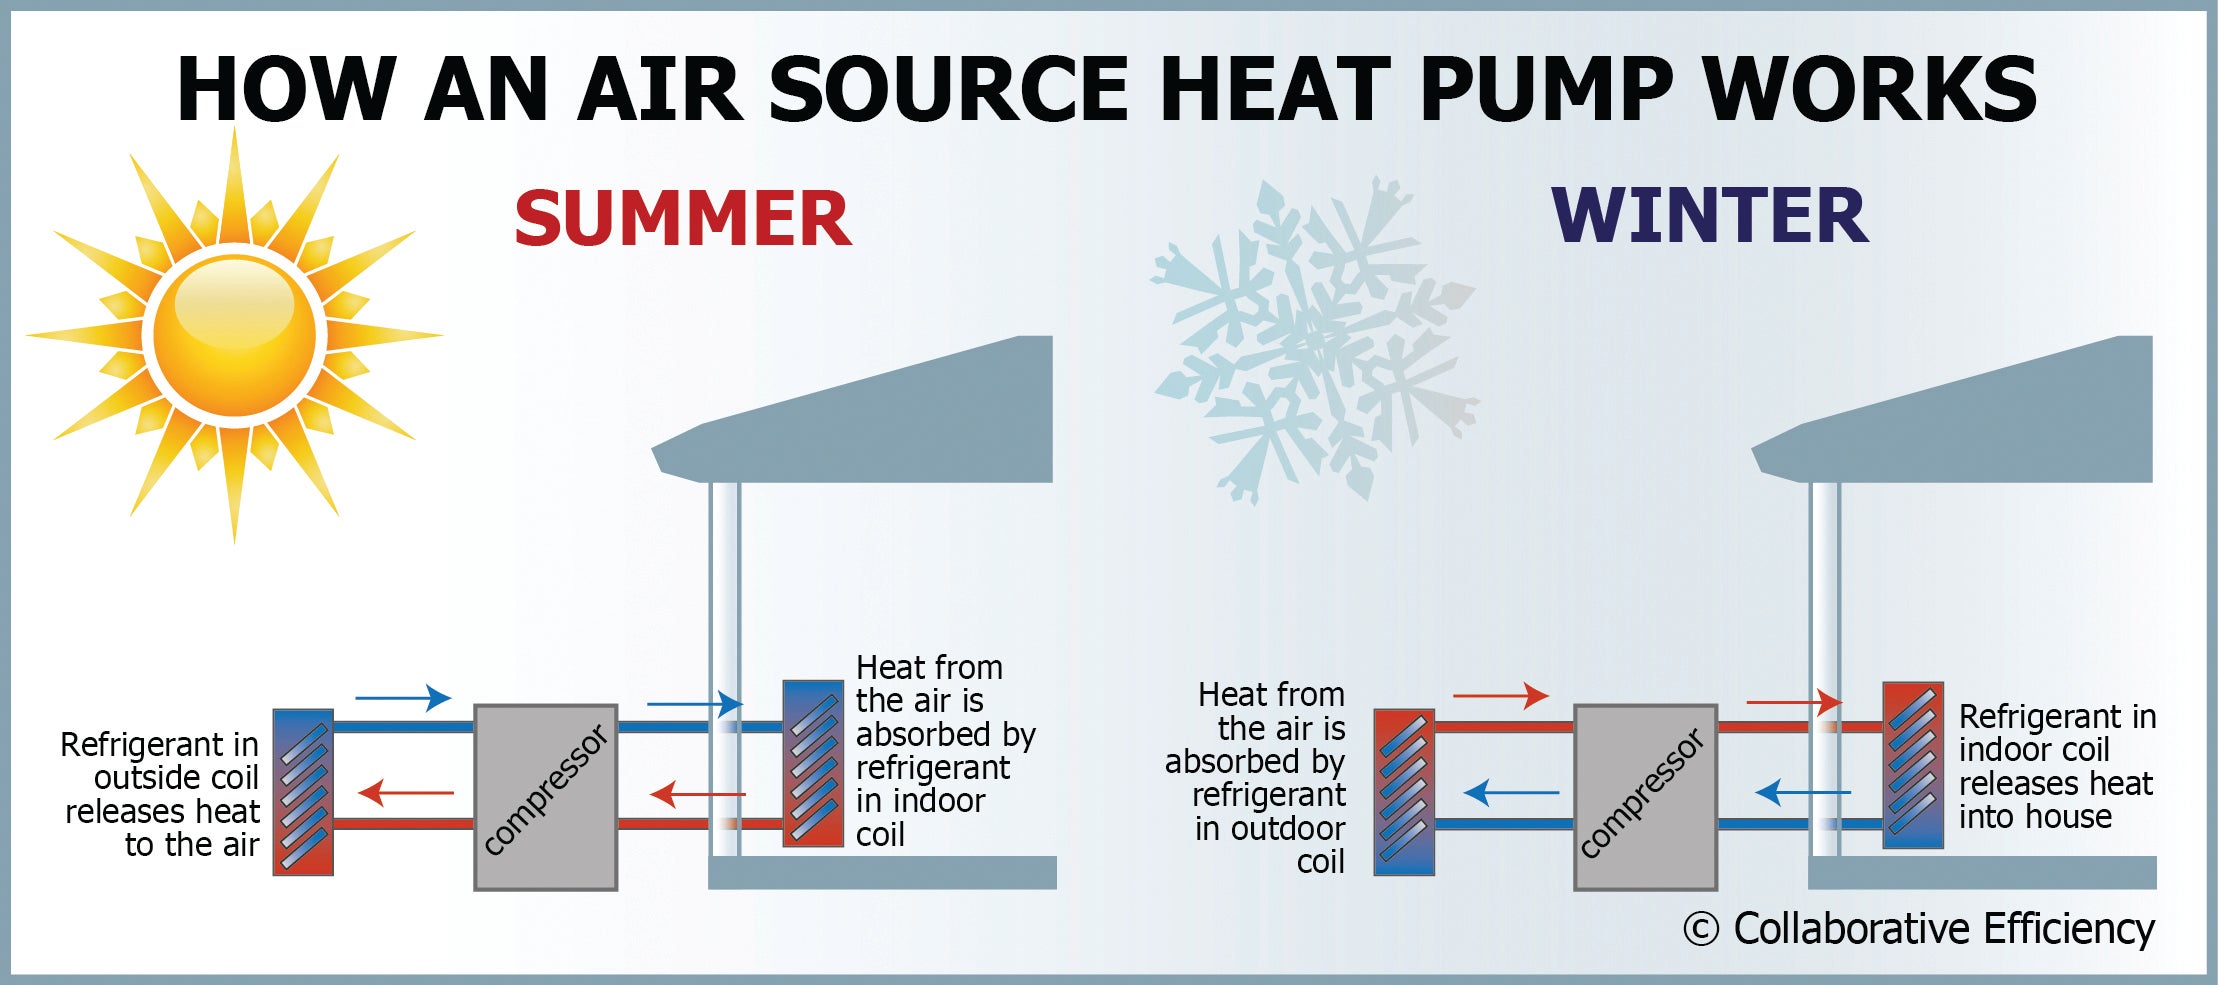 Air Source Heat Pump, Summer and Winter Operation